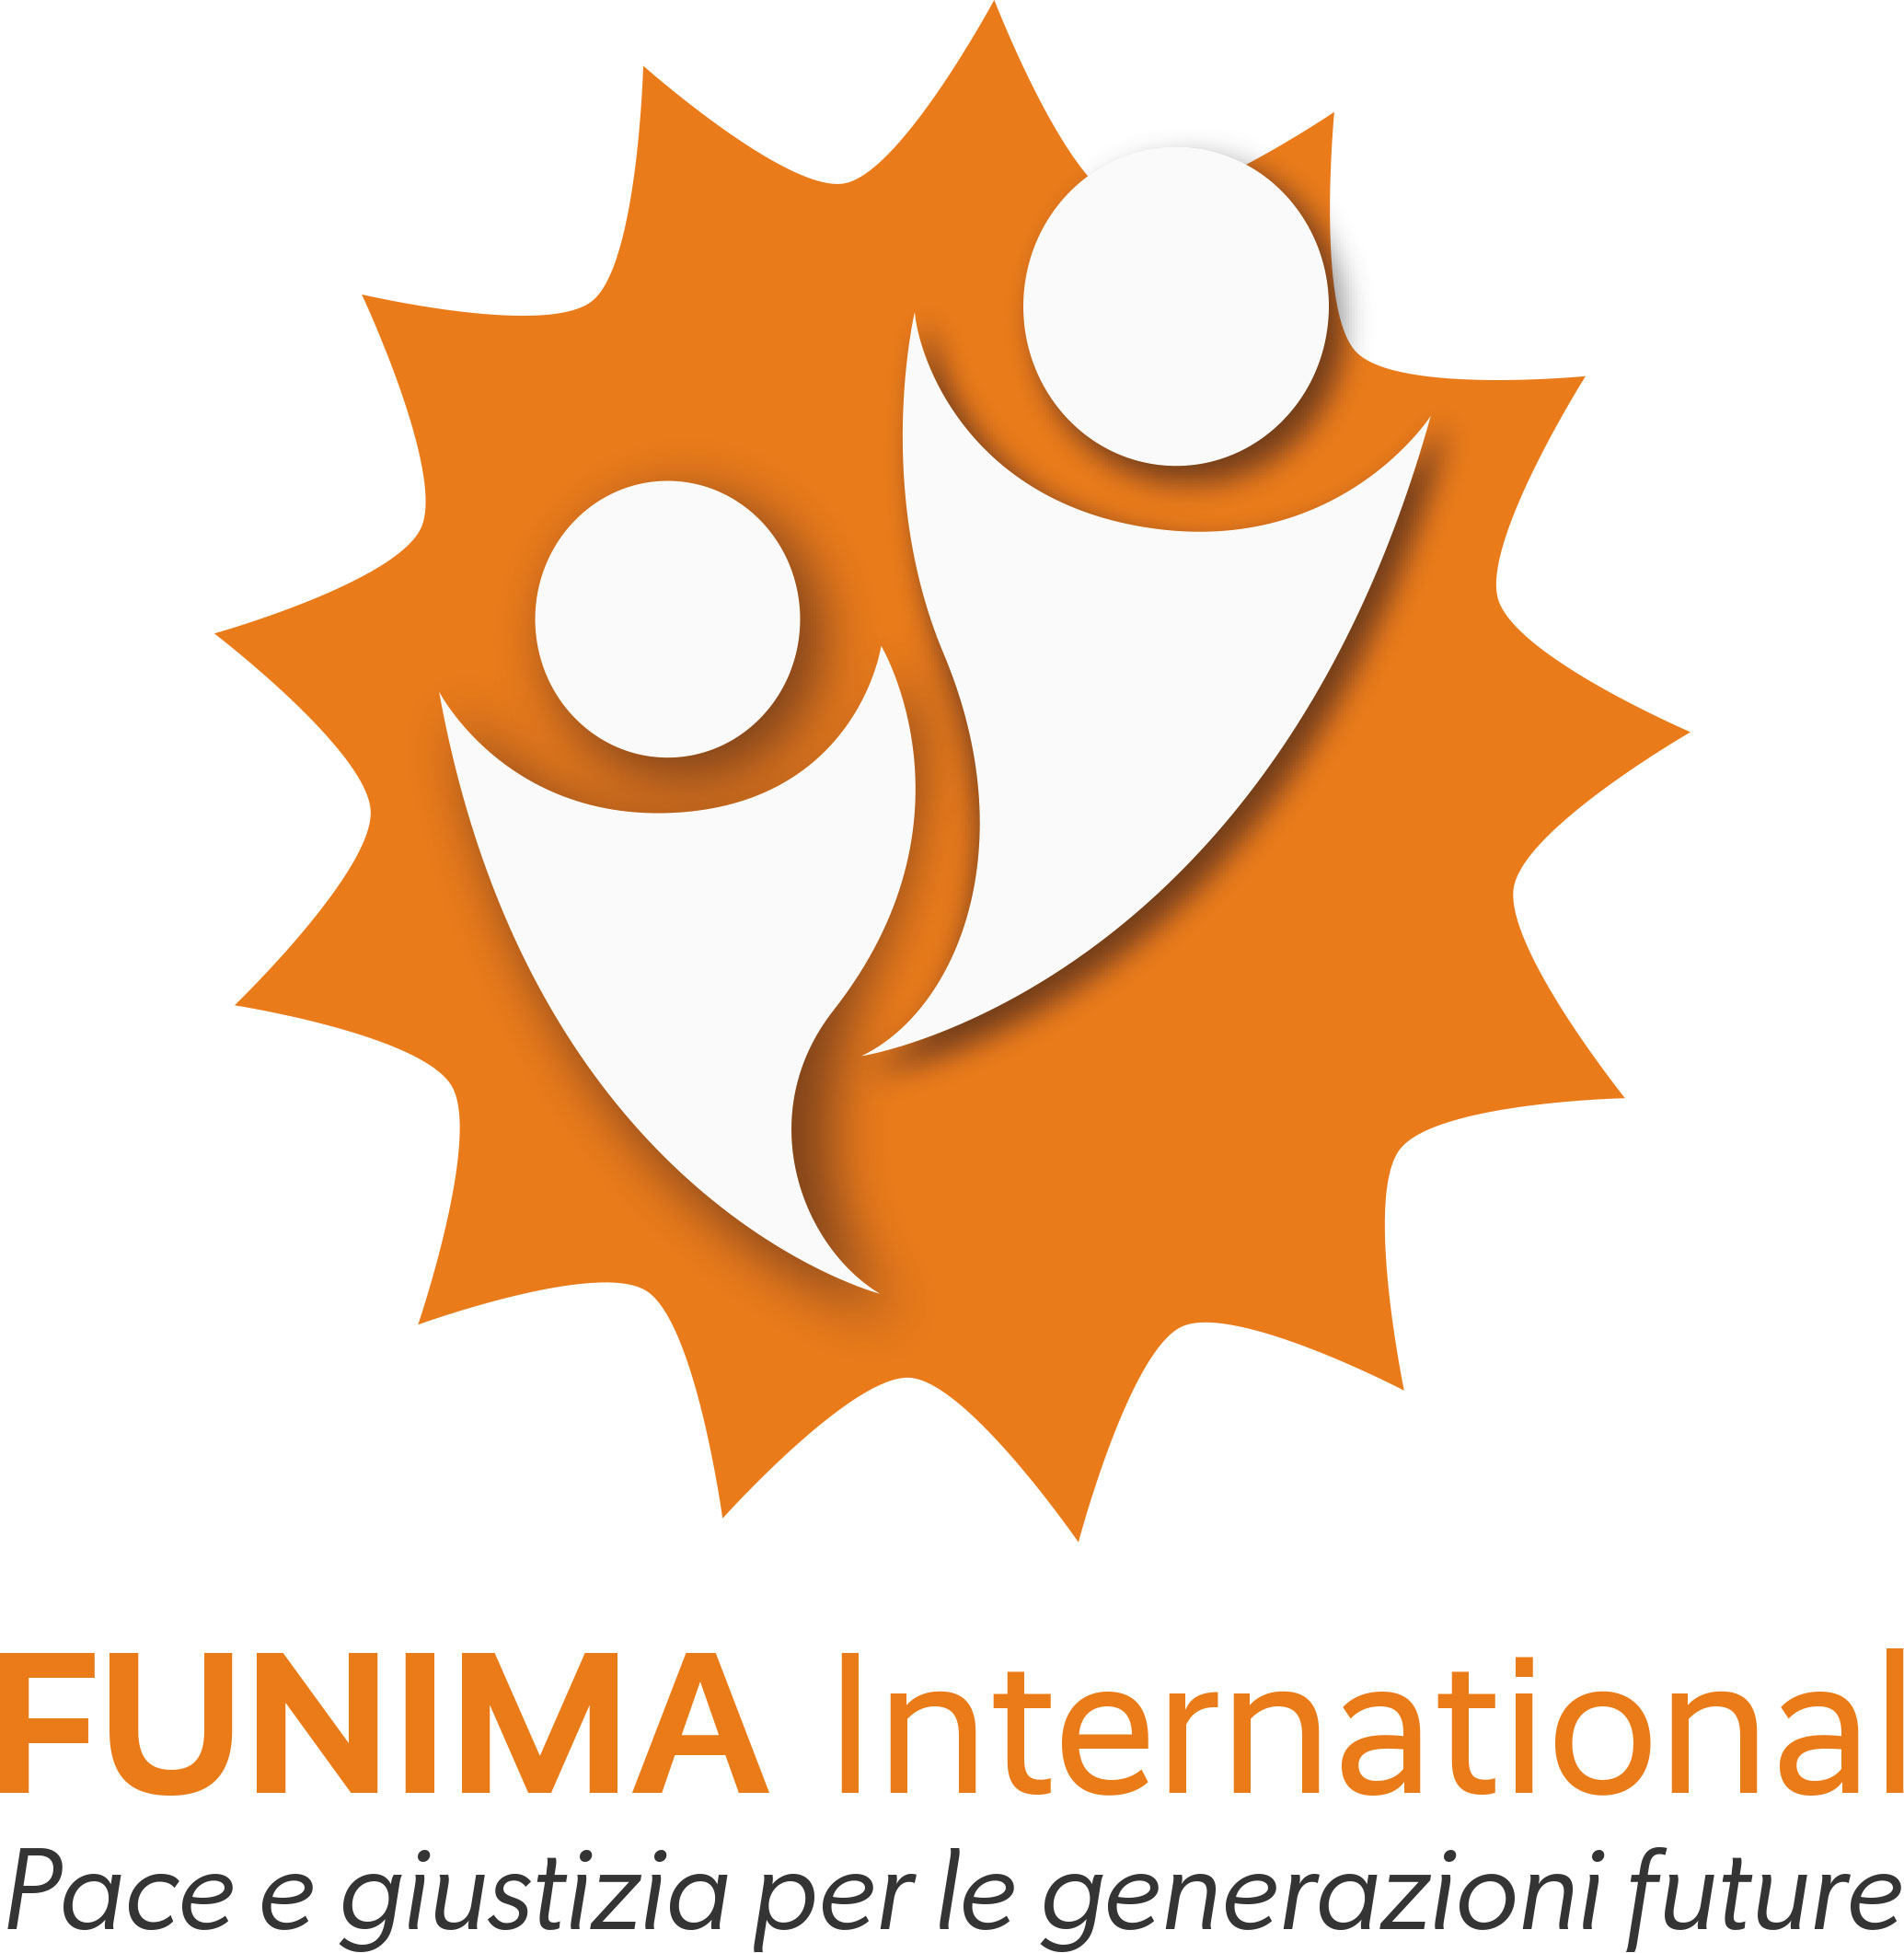 FUNIMA International logo